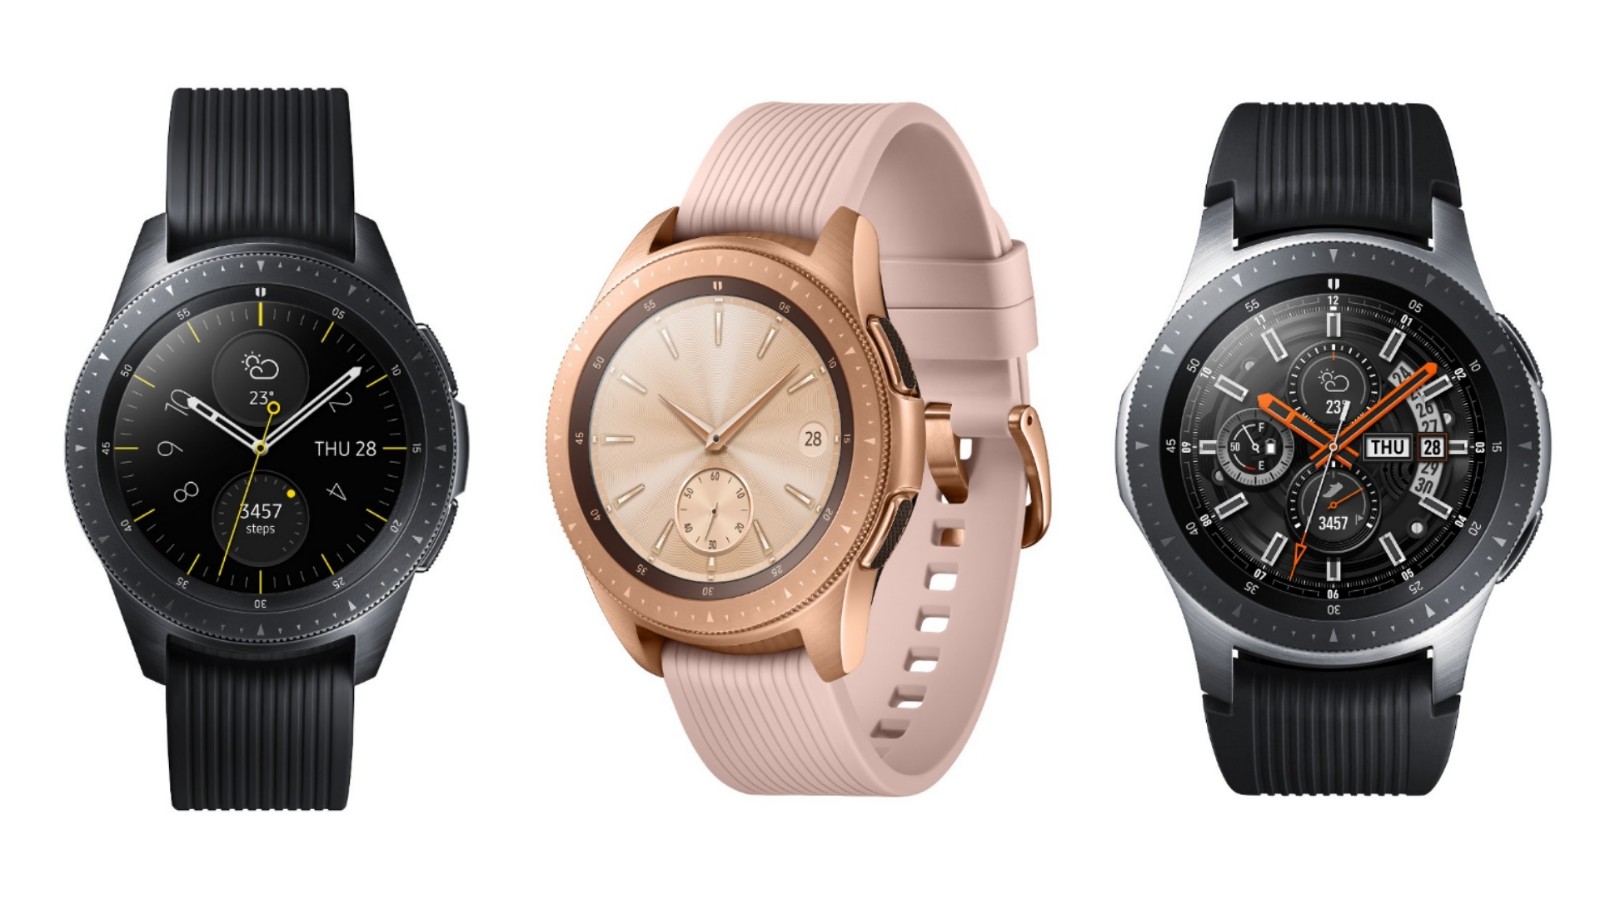 Samsung, Corning, Galaxy Watch, Gorilla Glass DX+, Smartphone, Smartwatch, Gadget news, Technology news